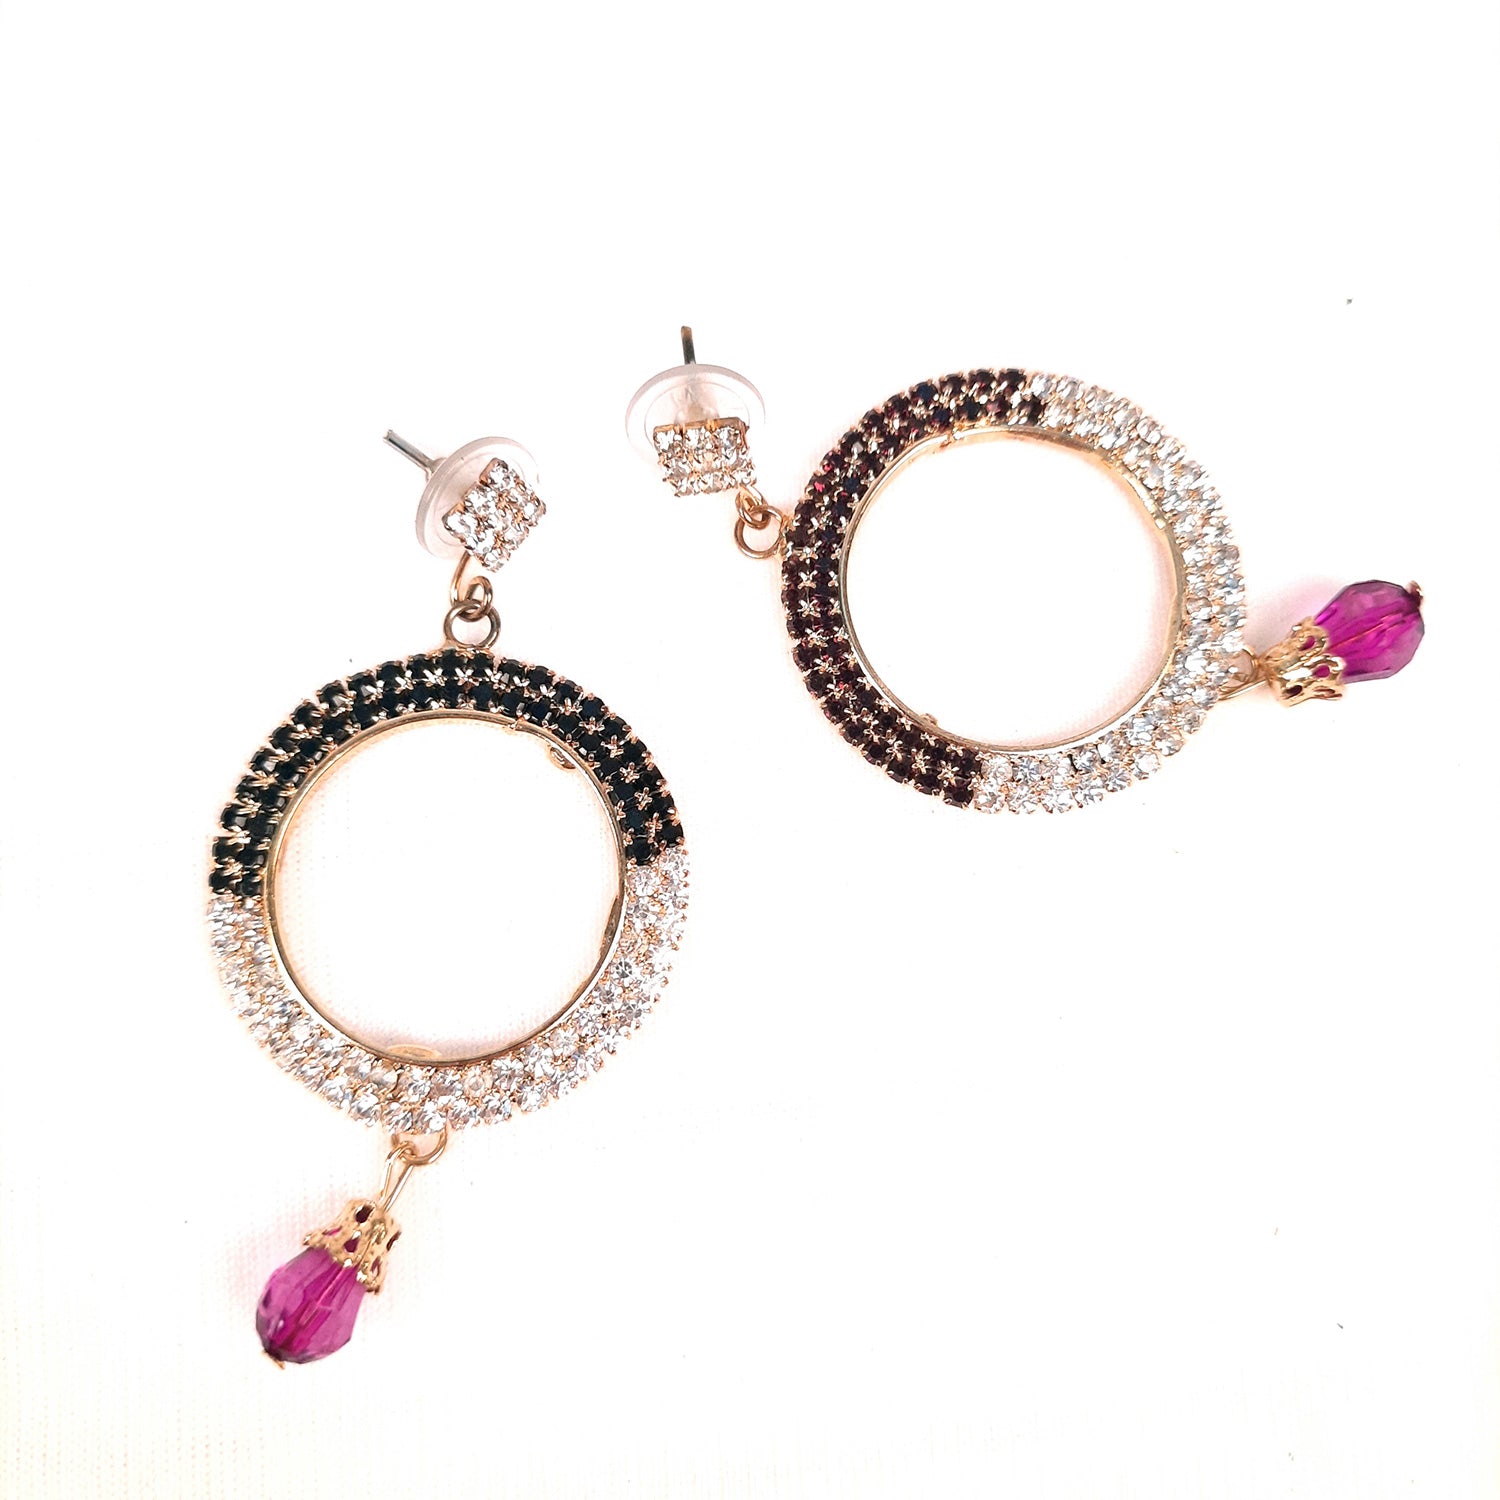 Earrings for Women & Girls | Earring Hoops - Stylish Crystal Earrings | Stylish Fashion Jewellery | Gift for Her, Friendship Day, Valentine's Day Gift - Apkamart